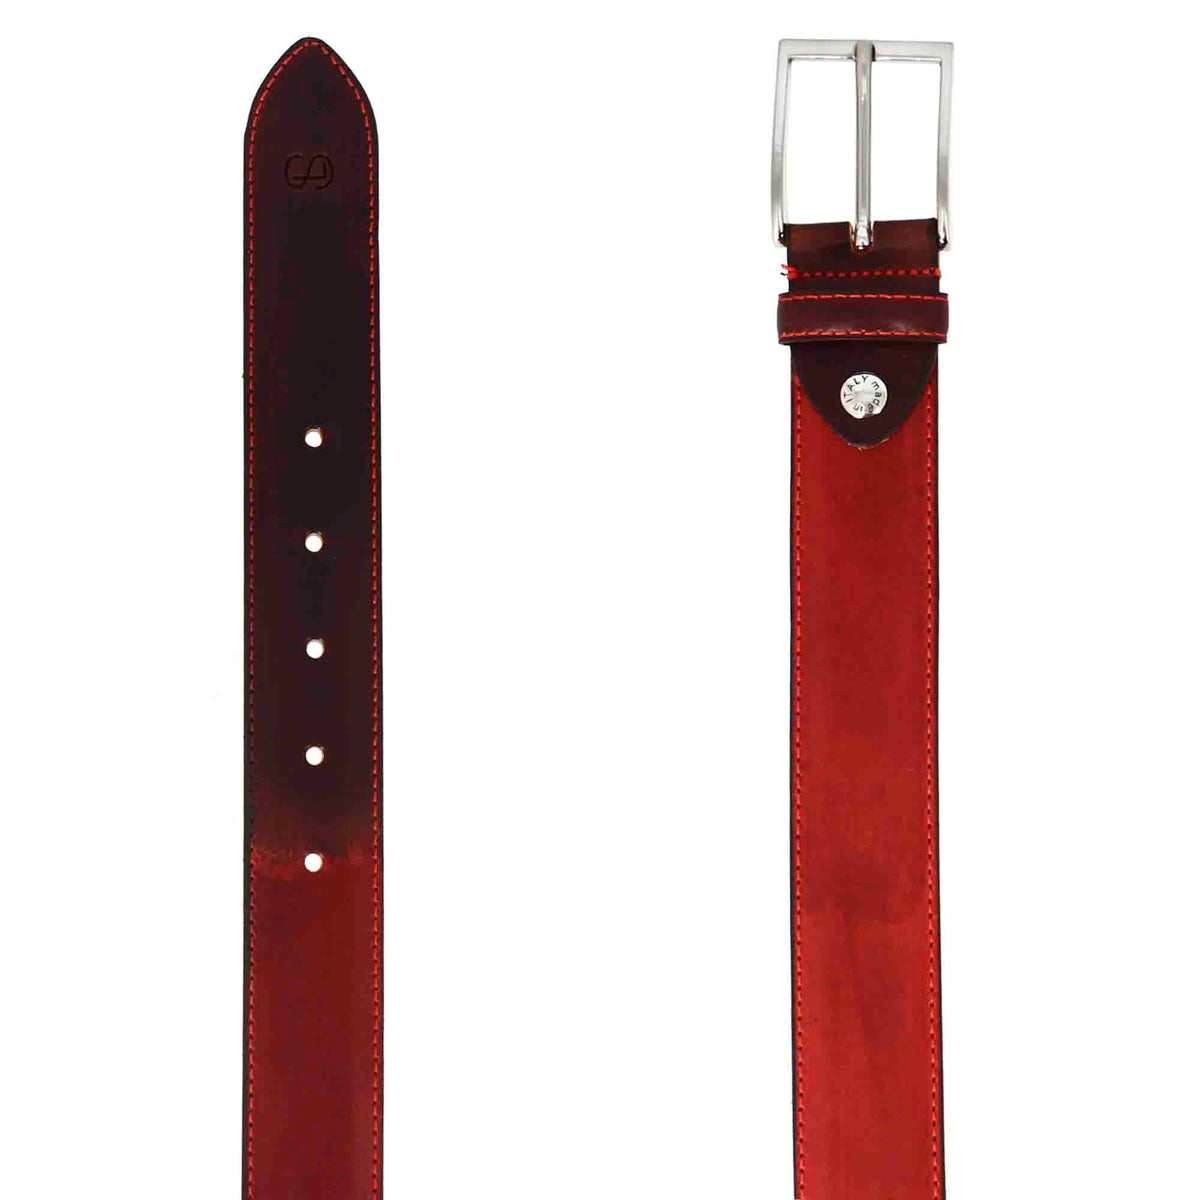 Elegant men's belt in hand-dyed dark brown and red full-grain leather